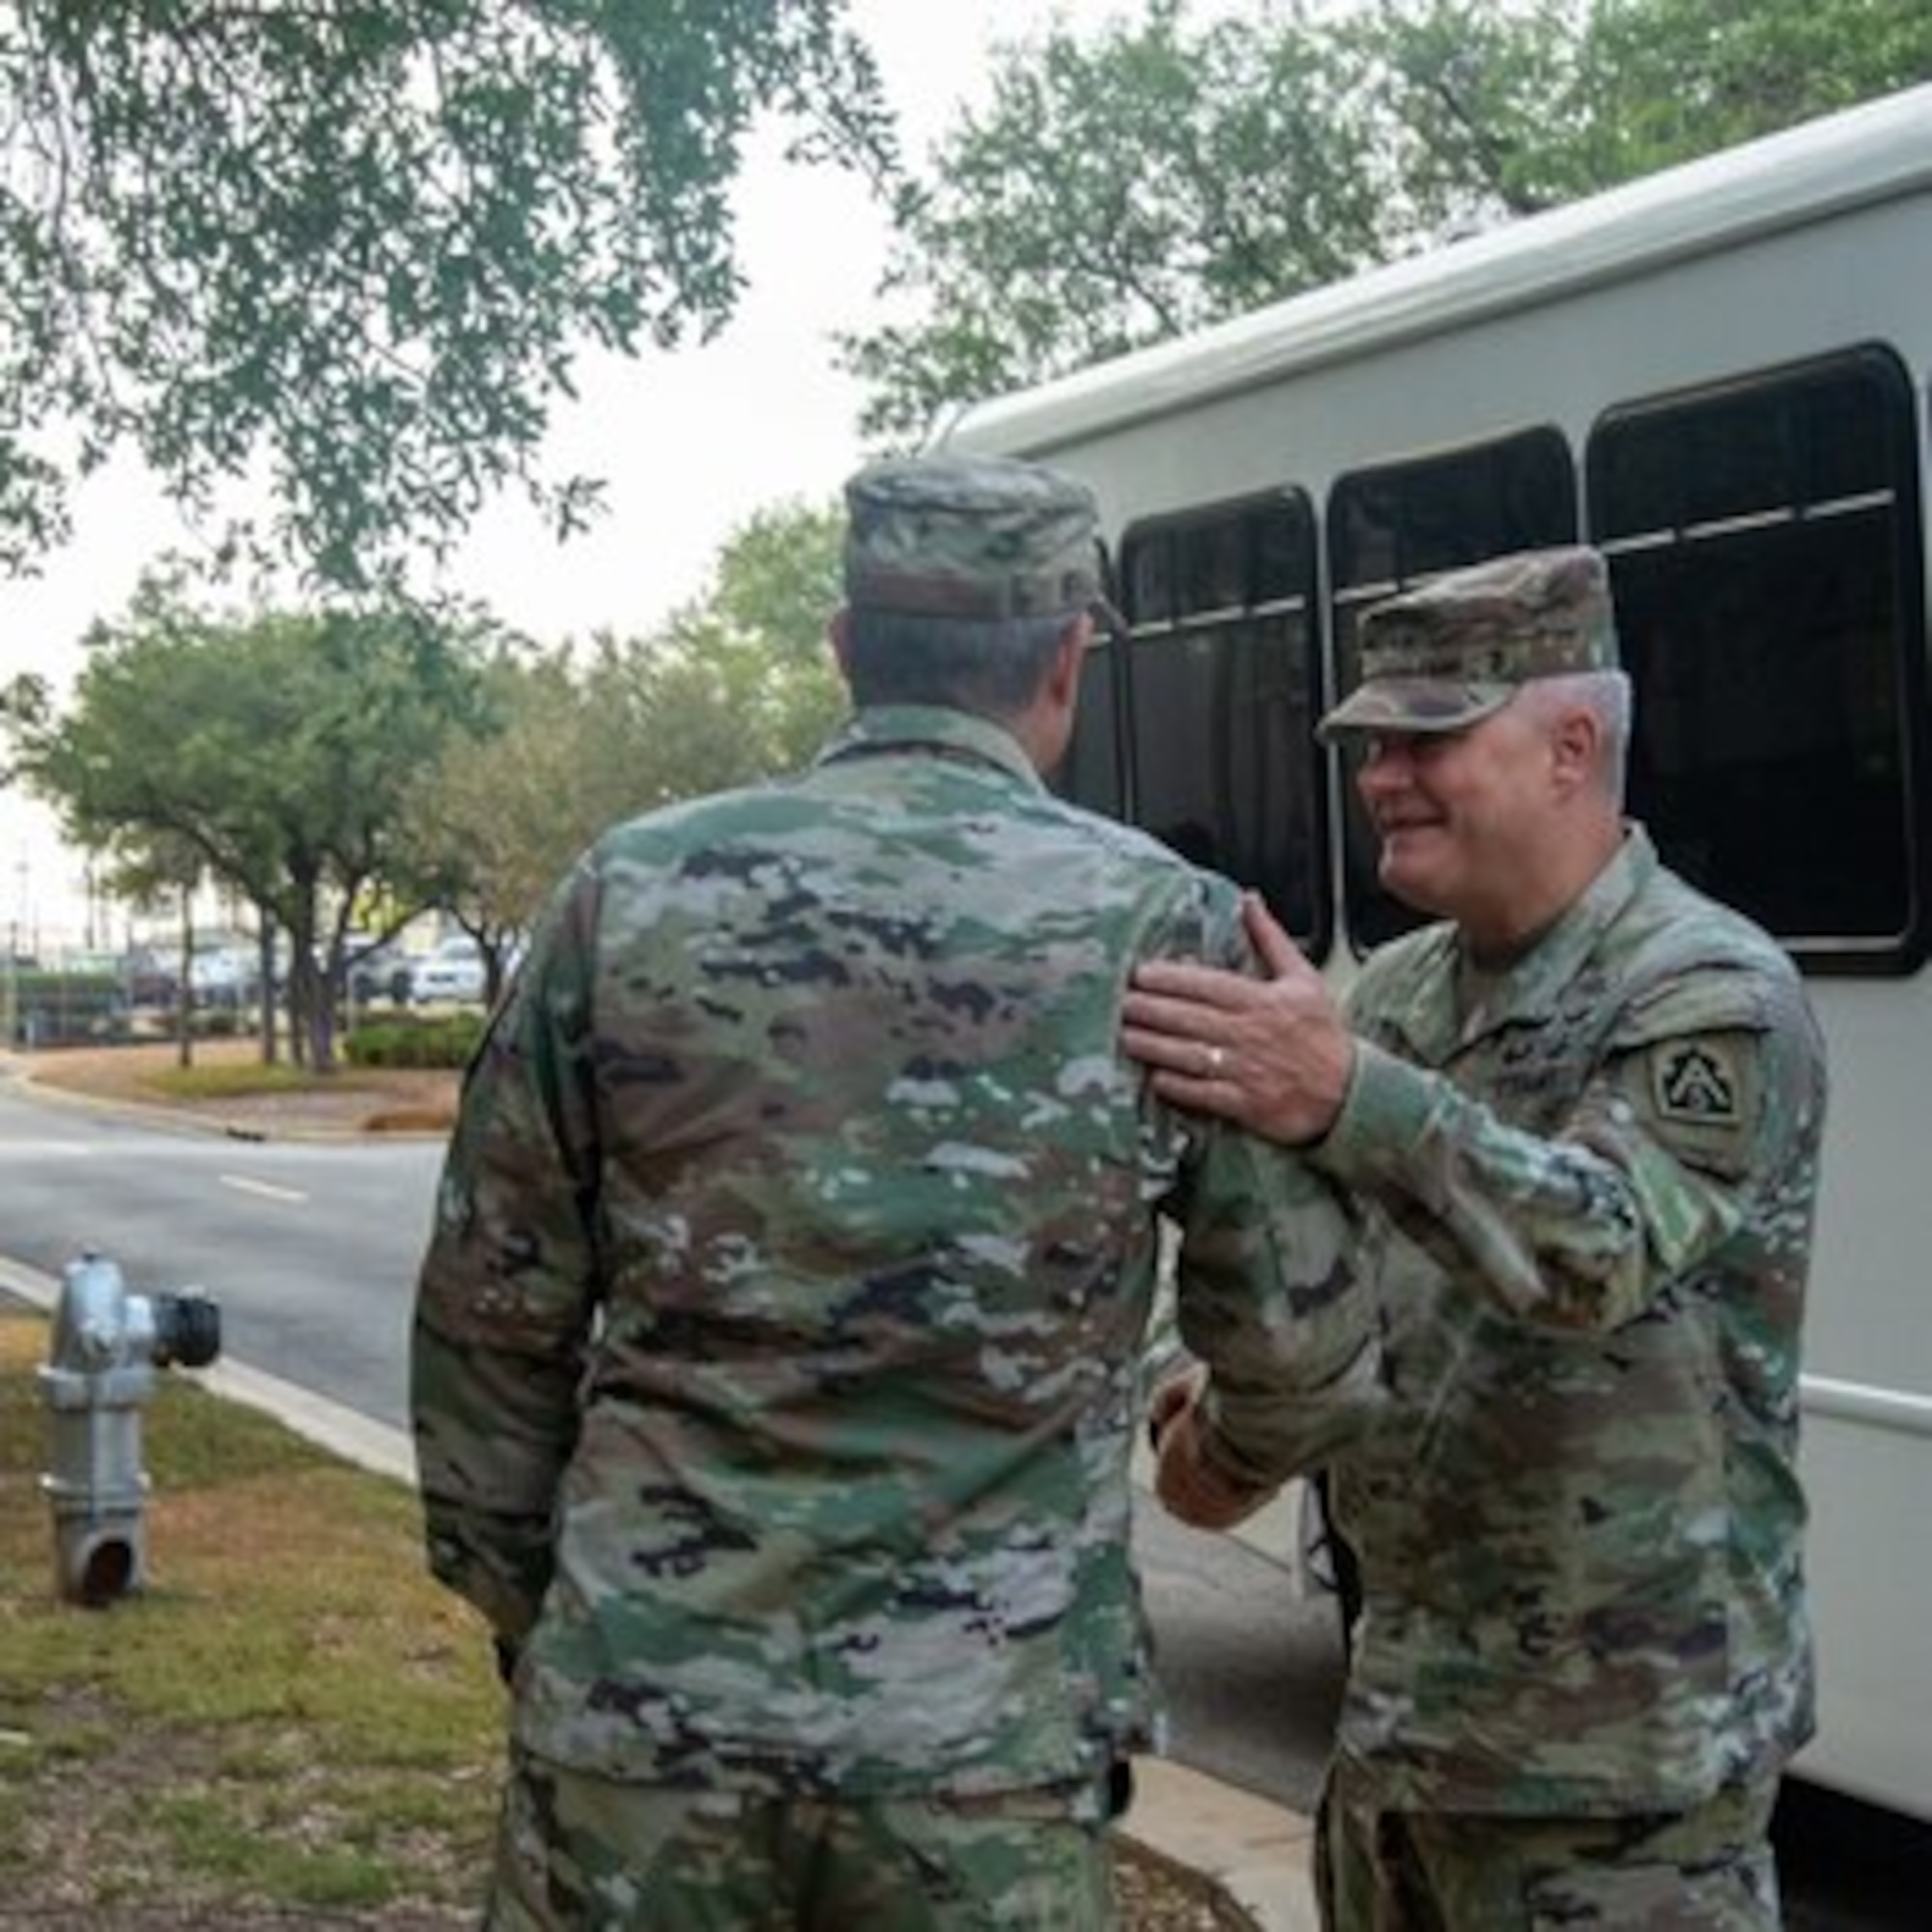 Two leaders in uniform shake hands.